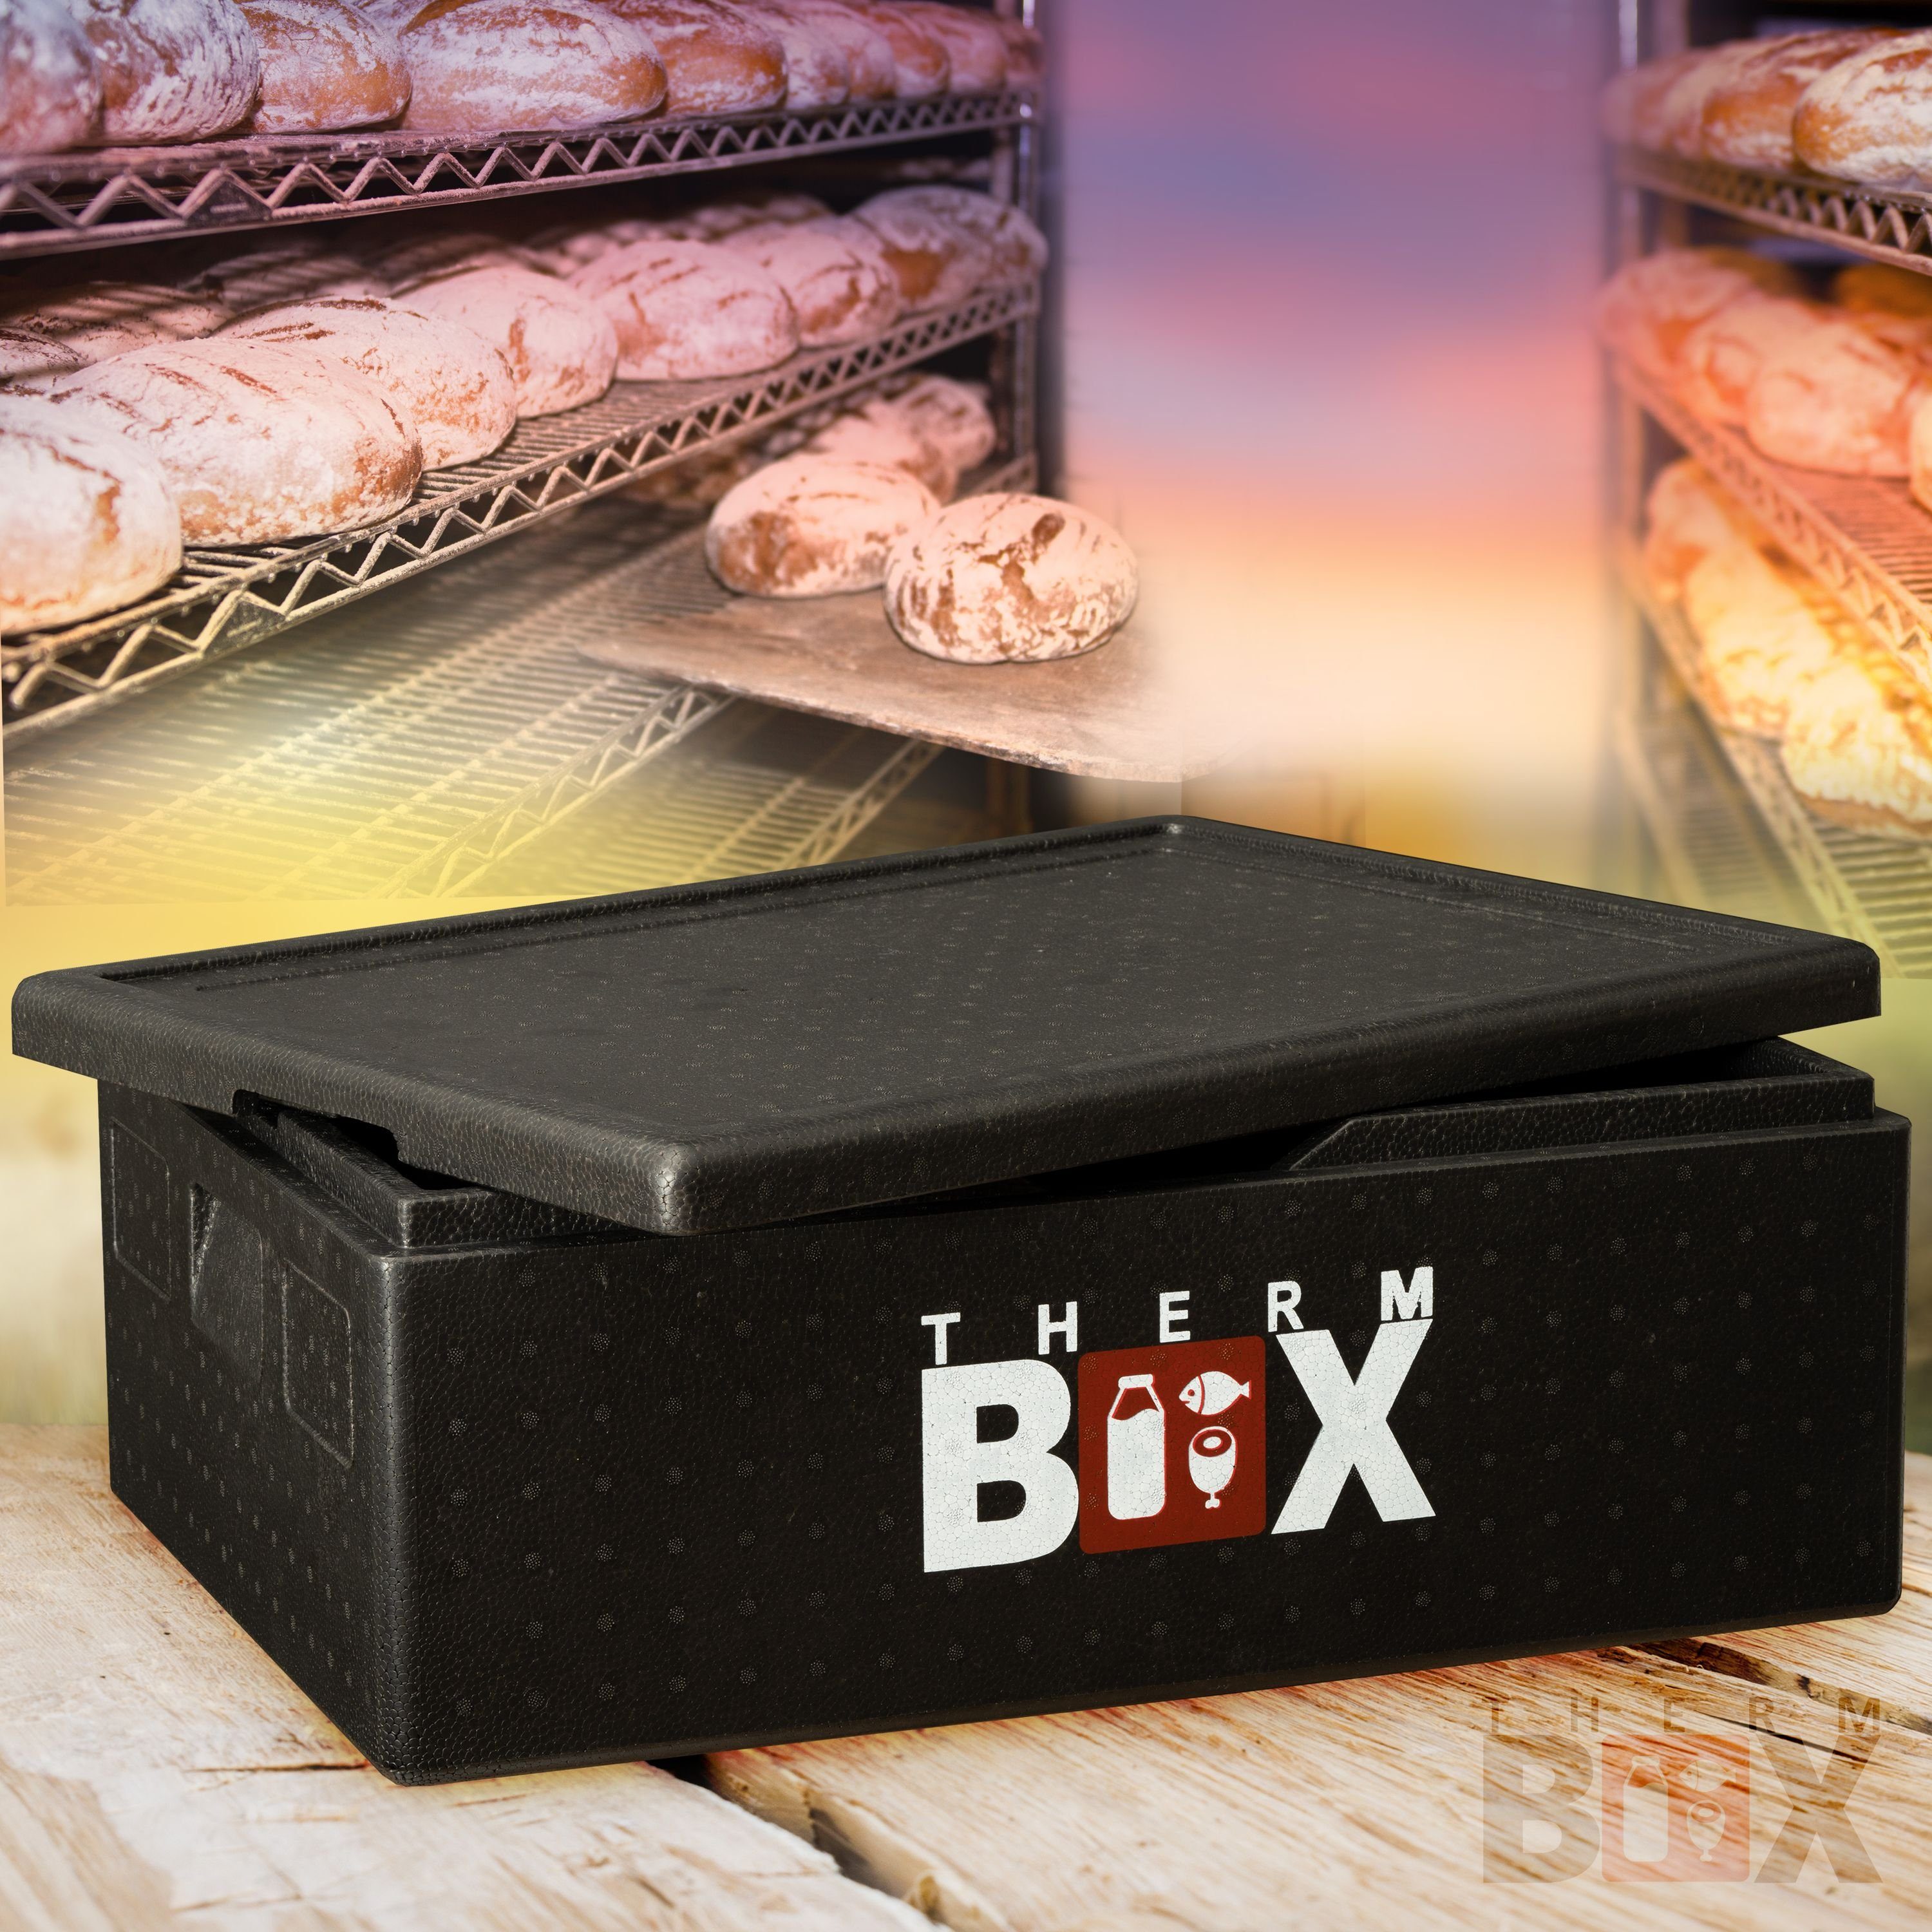 Deckel THERM-BOX Styroporbox im 53-Liter Styropor-Piocelan, (1, Innen: für E2 Thermobehälter Kühlbox Profibox mit Kiste 0-tlg., Box Karton), - B53 Warmhaltebox Thermobox Wiederverwendbar, 62,5x42,5x22cm